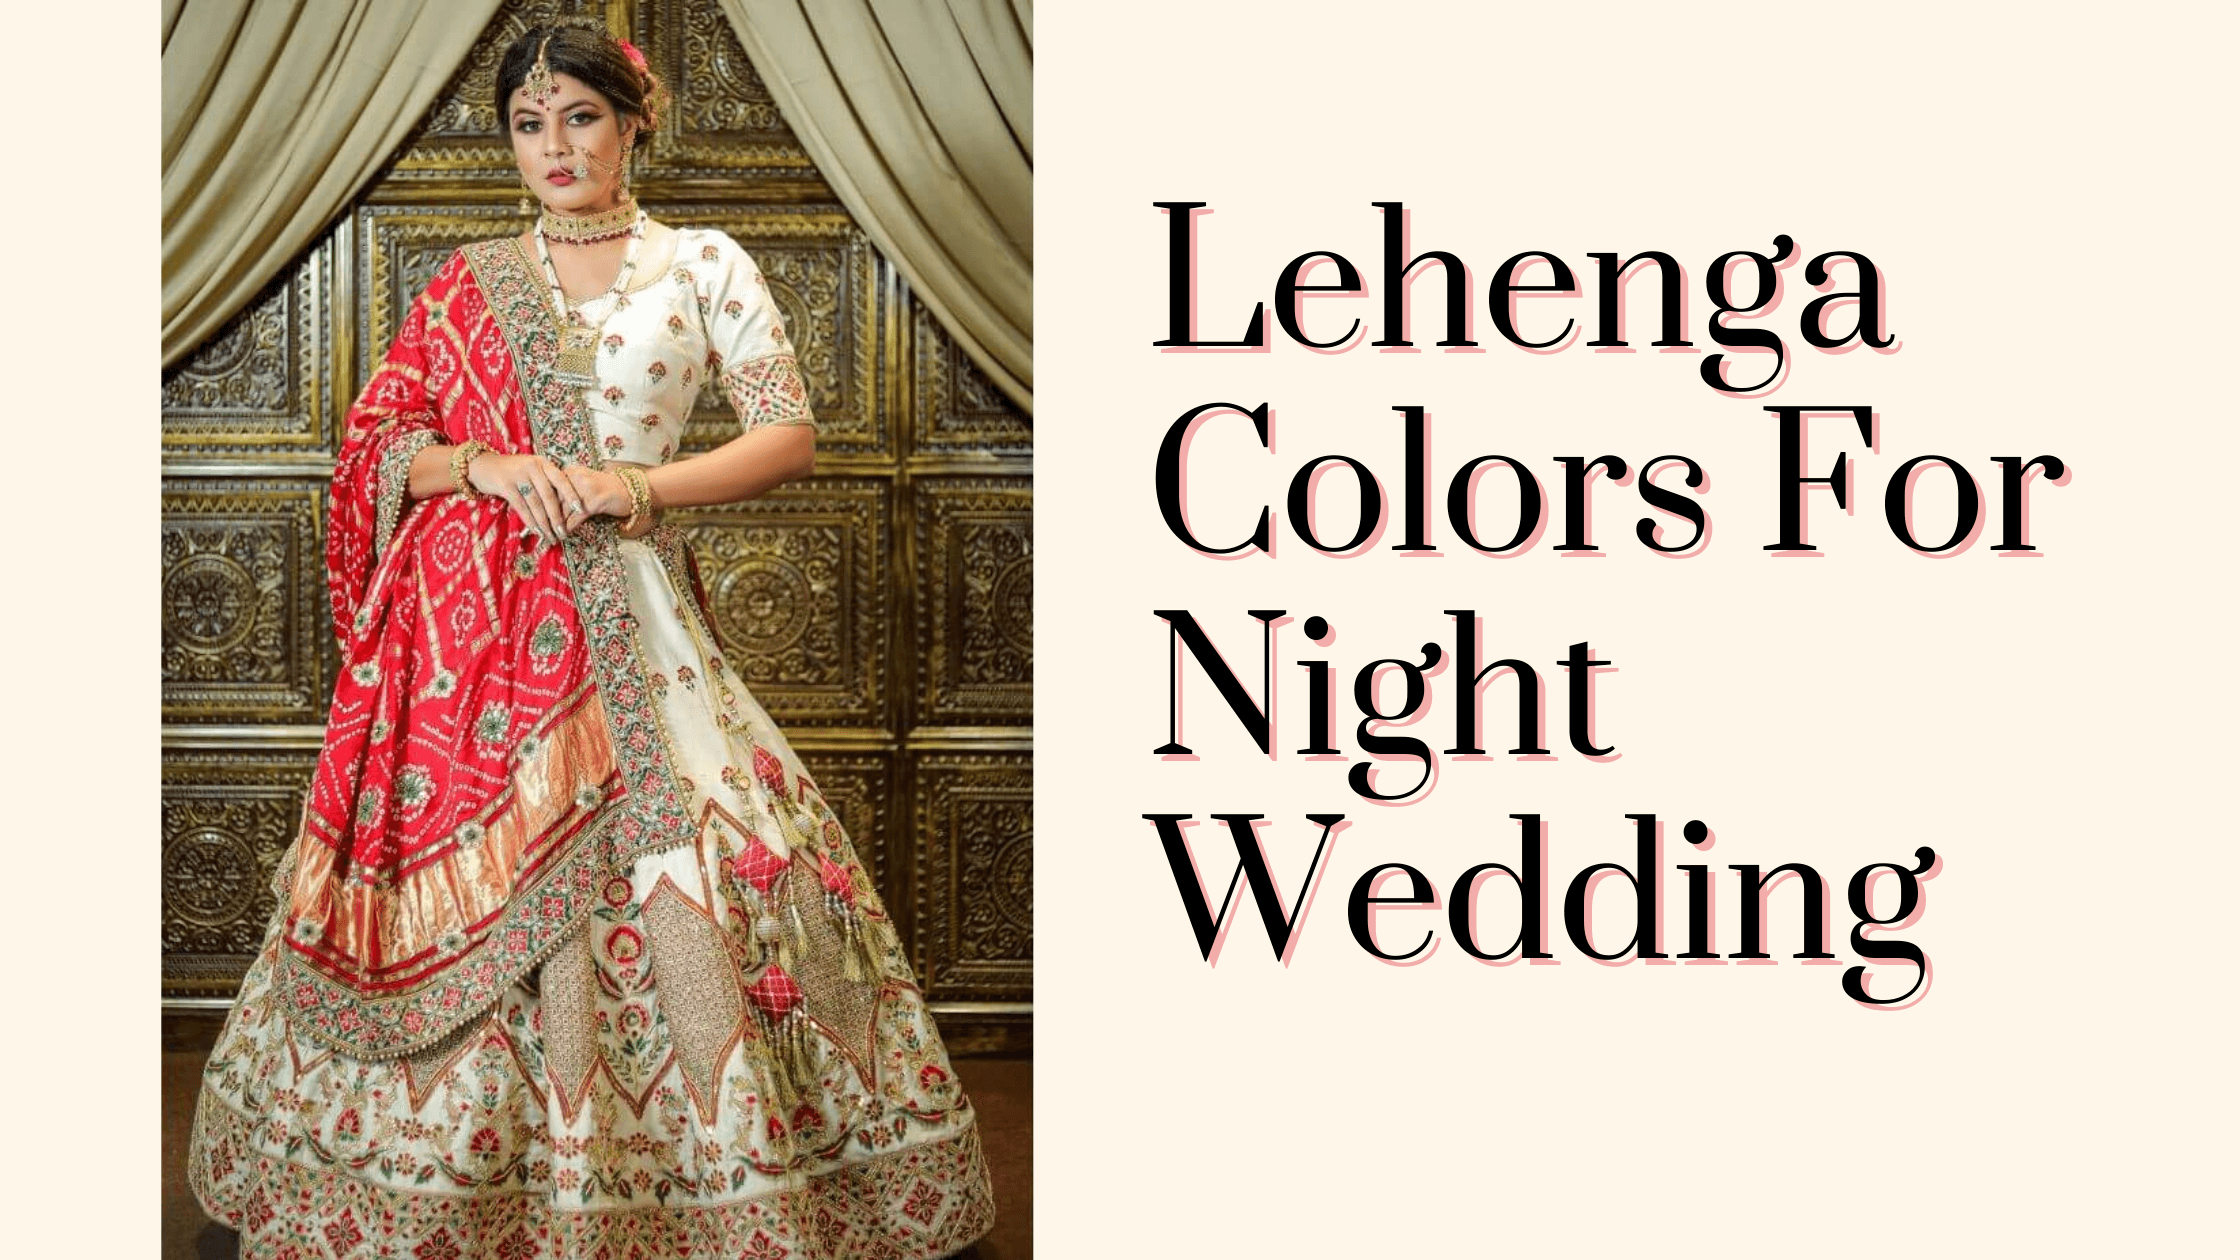 Lehenga Colors For Night Wedding